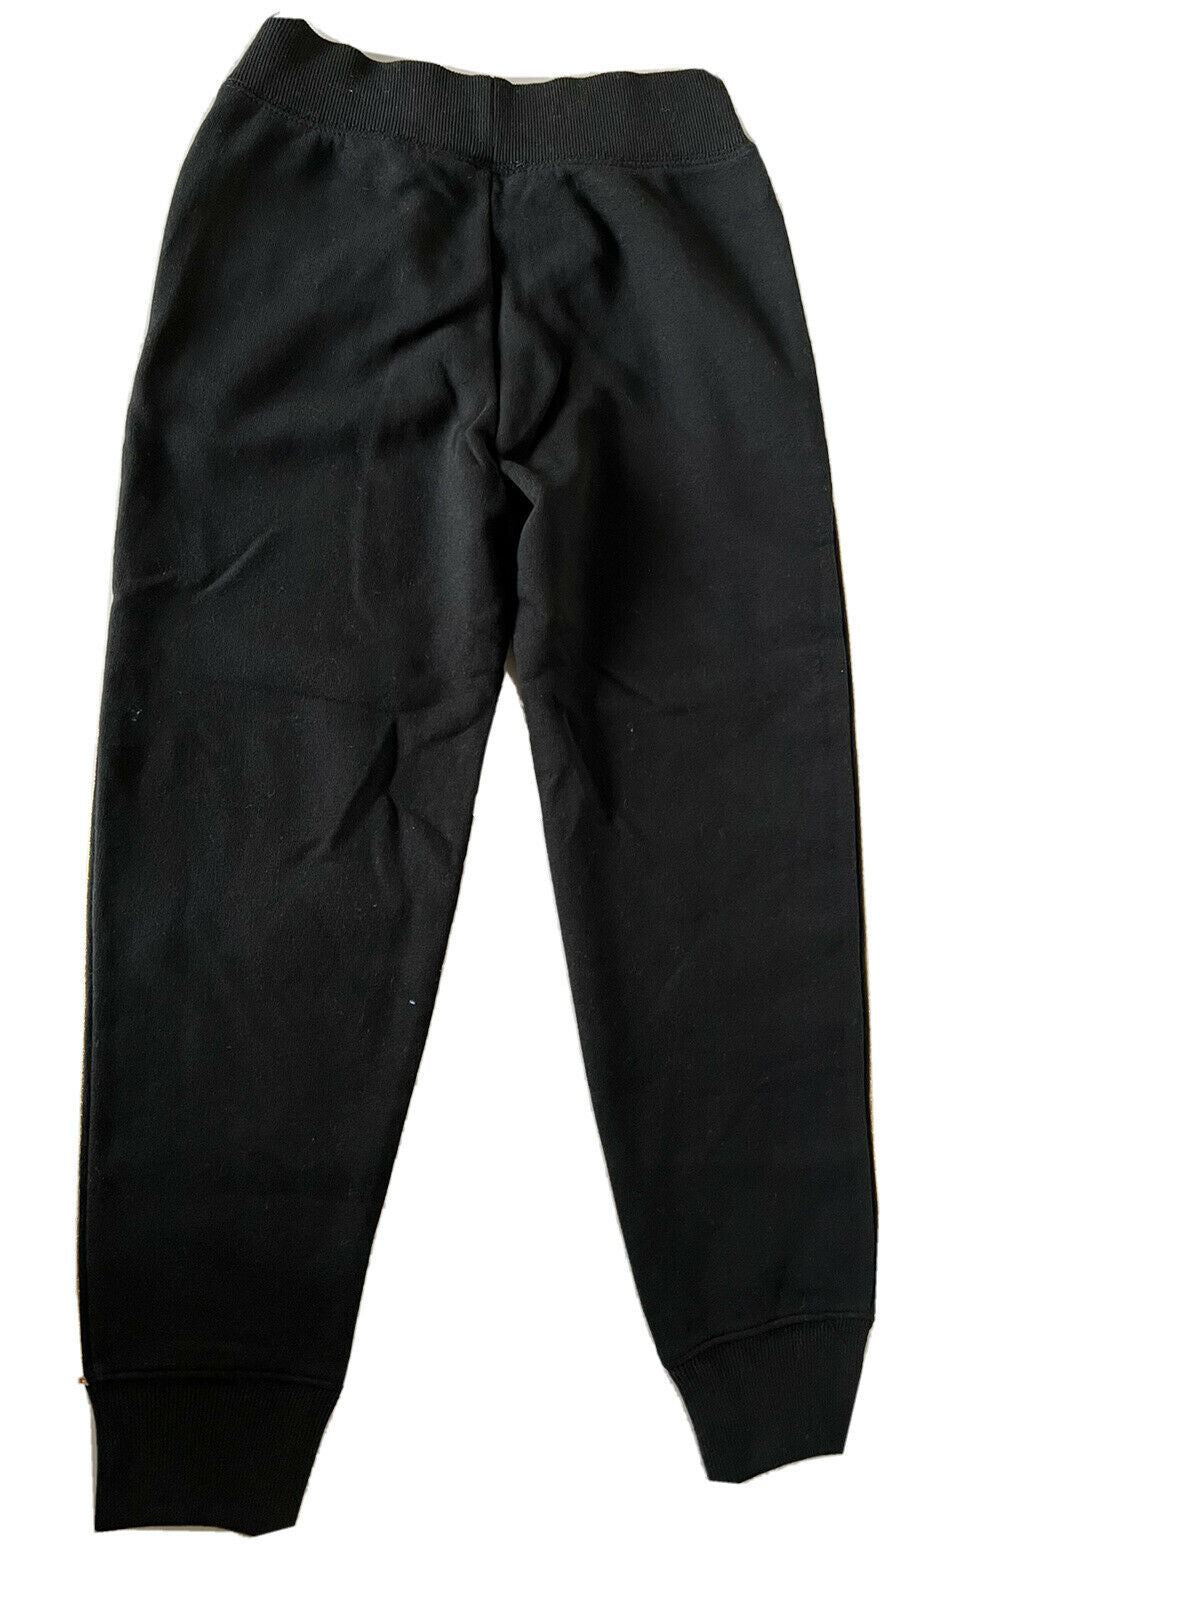 NWT Polo Ralph Lauren Girl's Black Pant M (8-10)